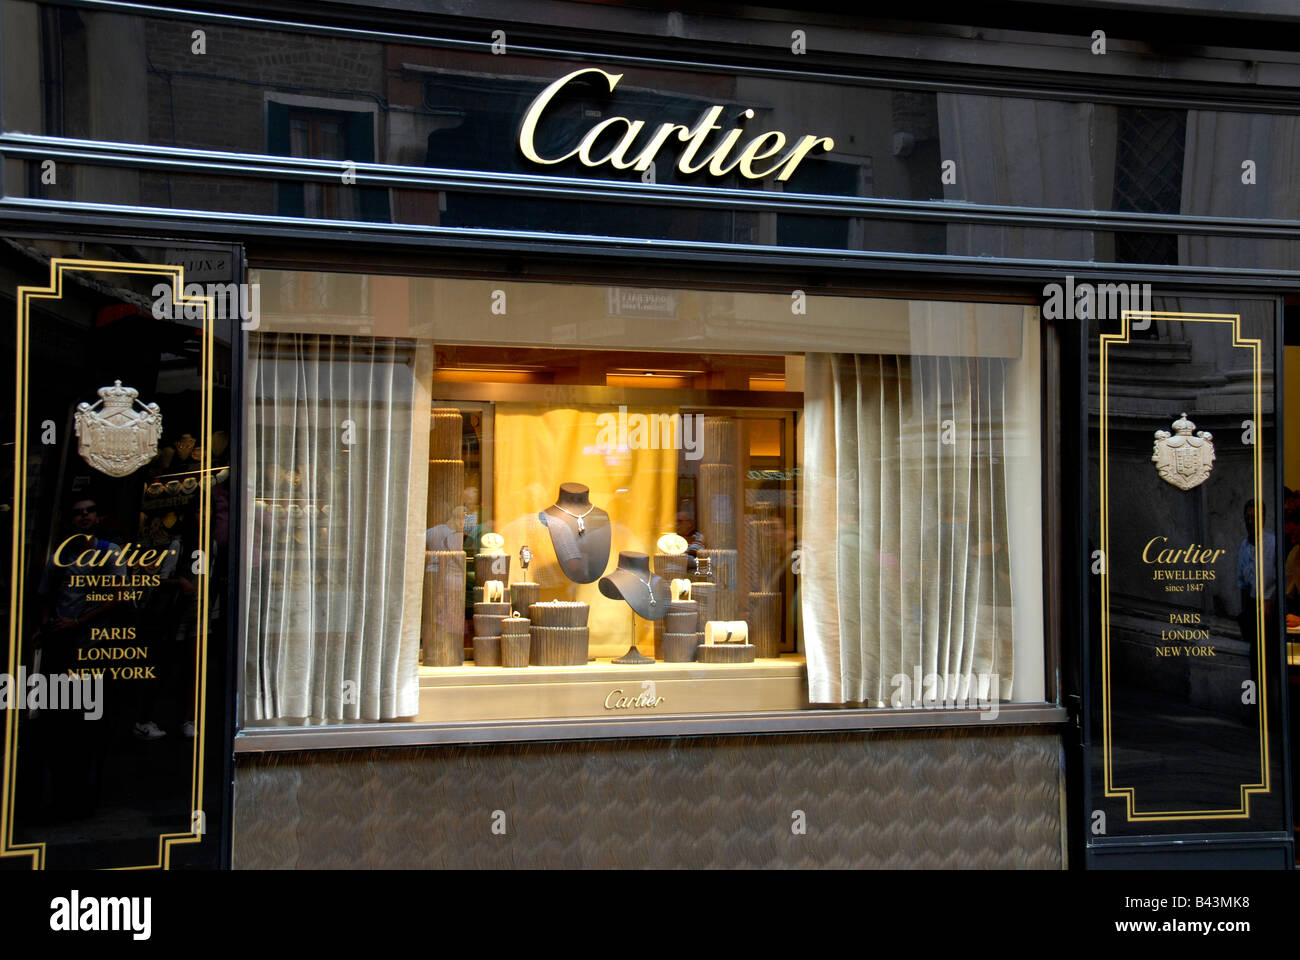 cartier shop